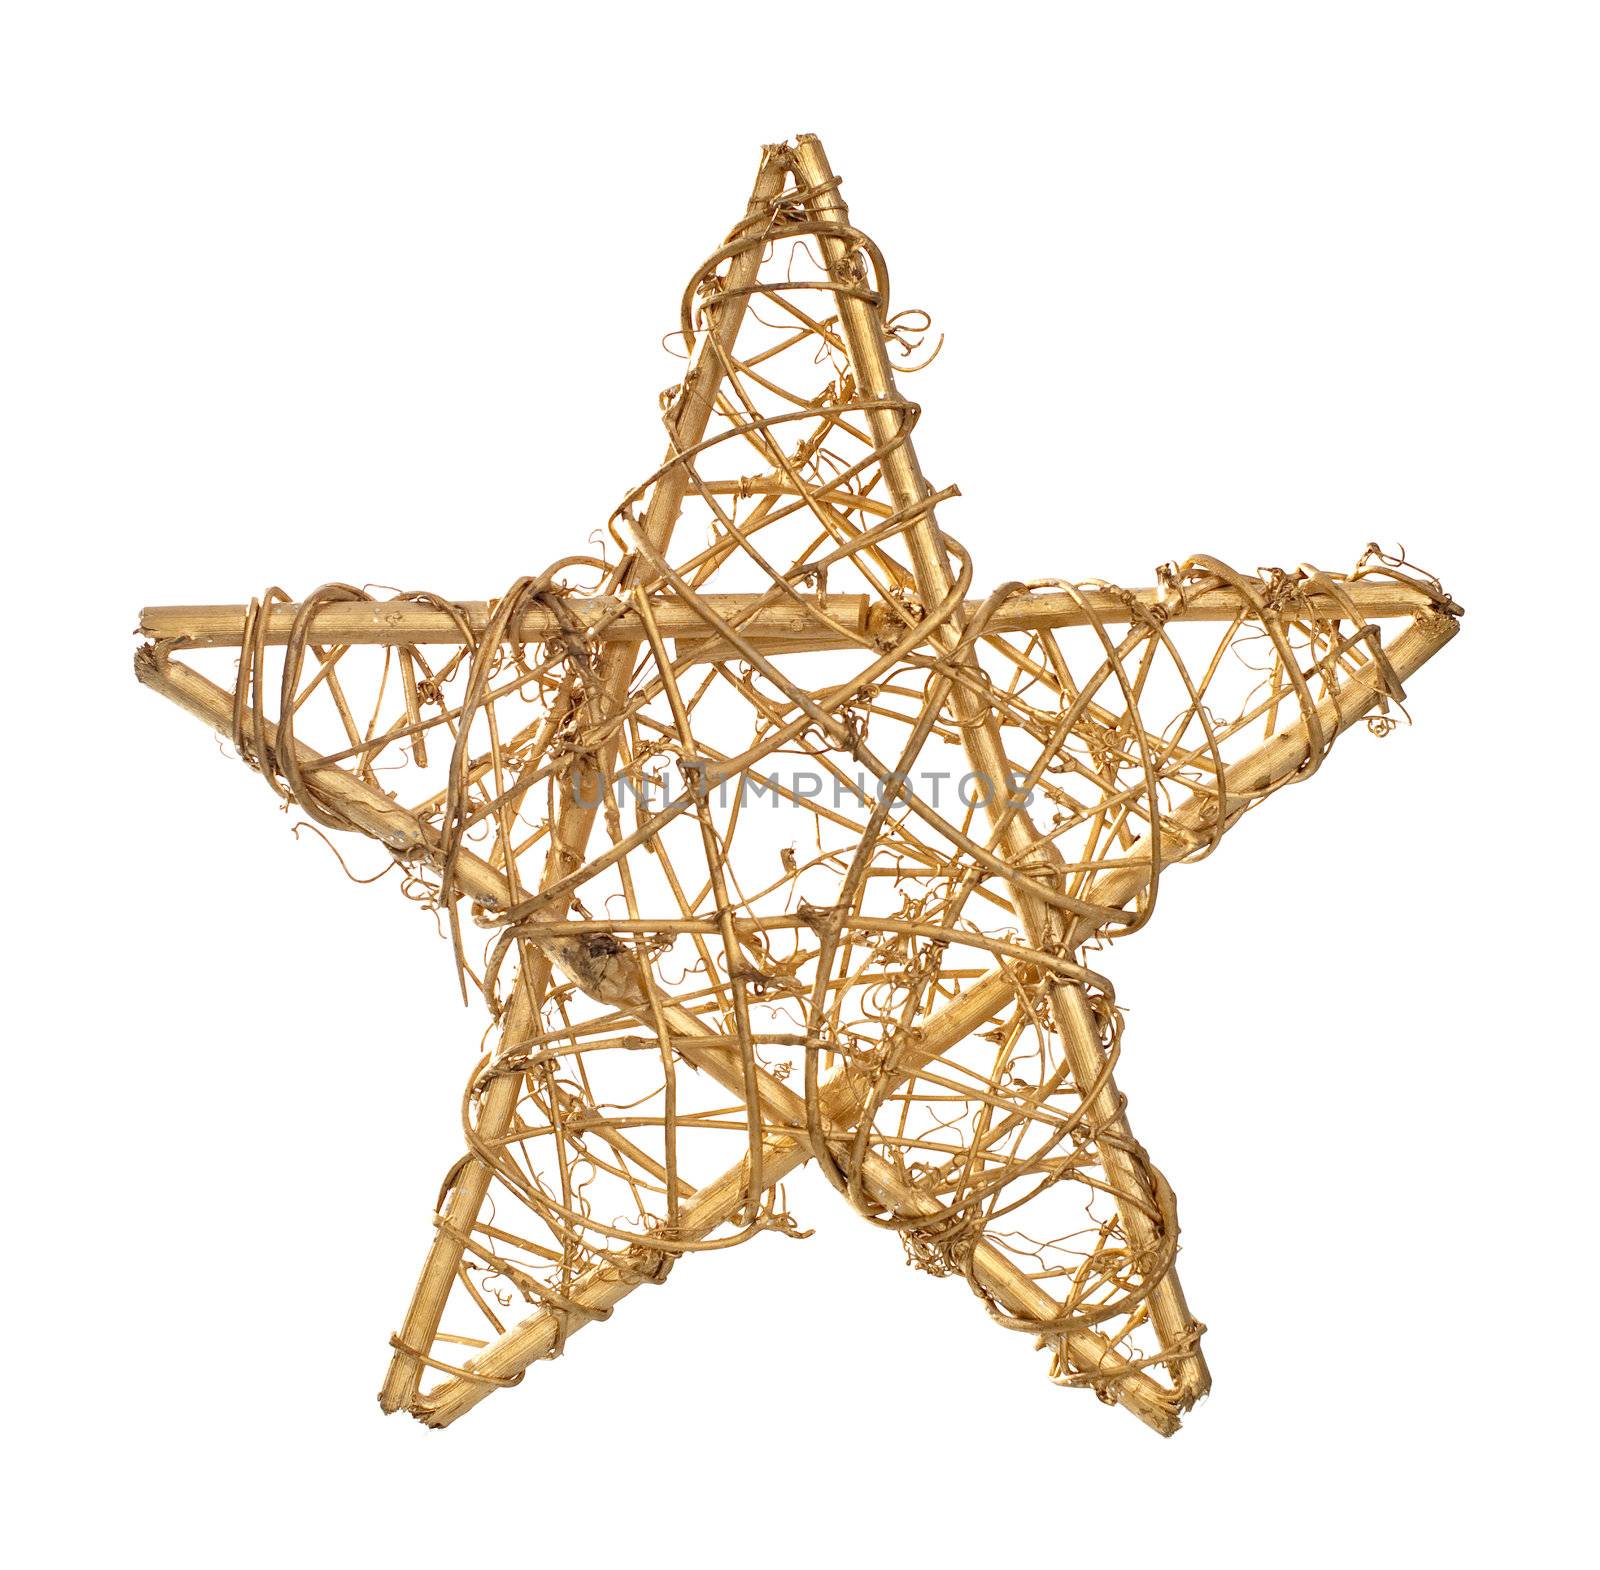 Gold star by homydesign